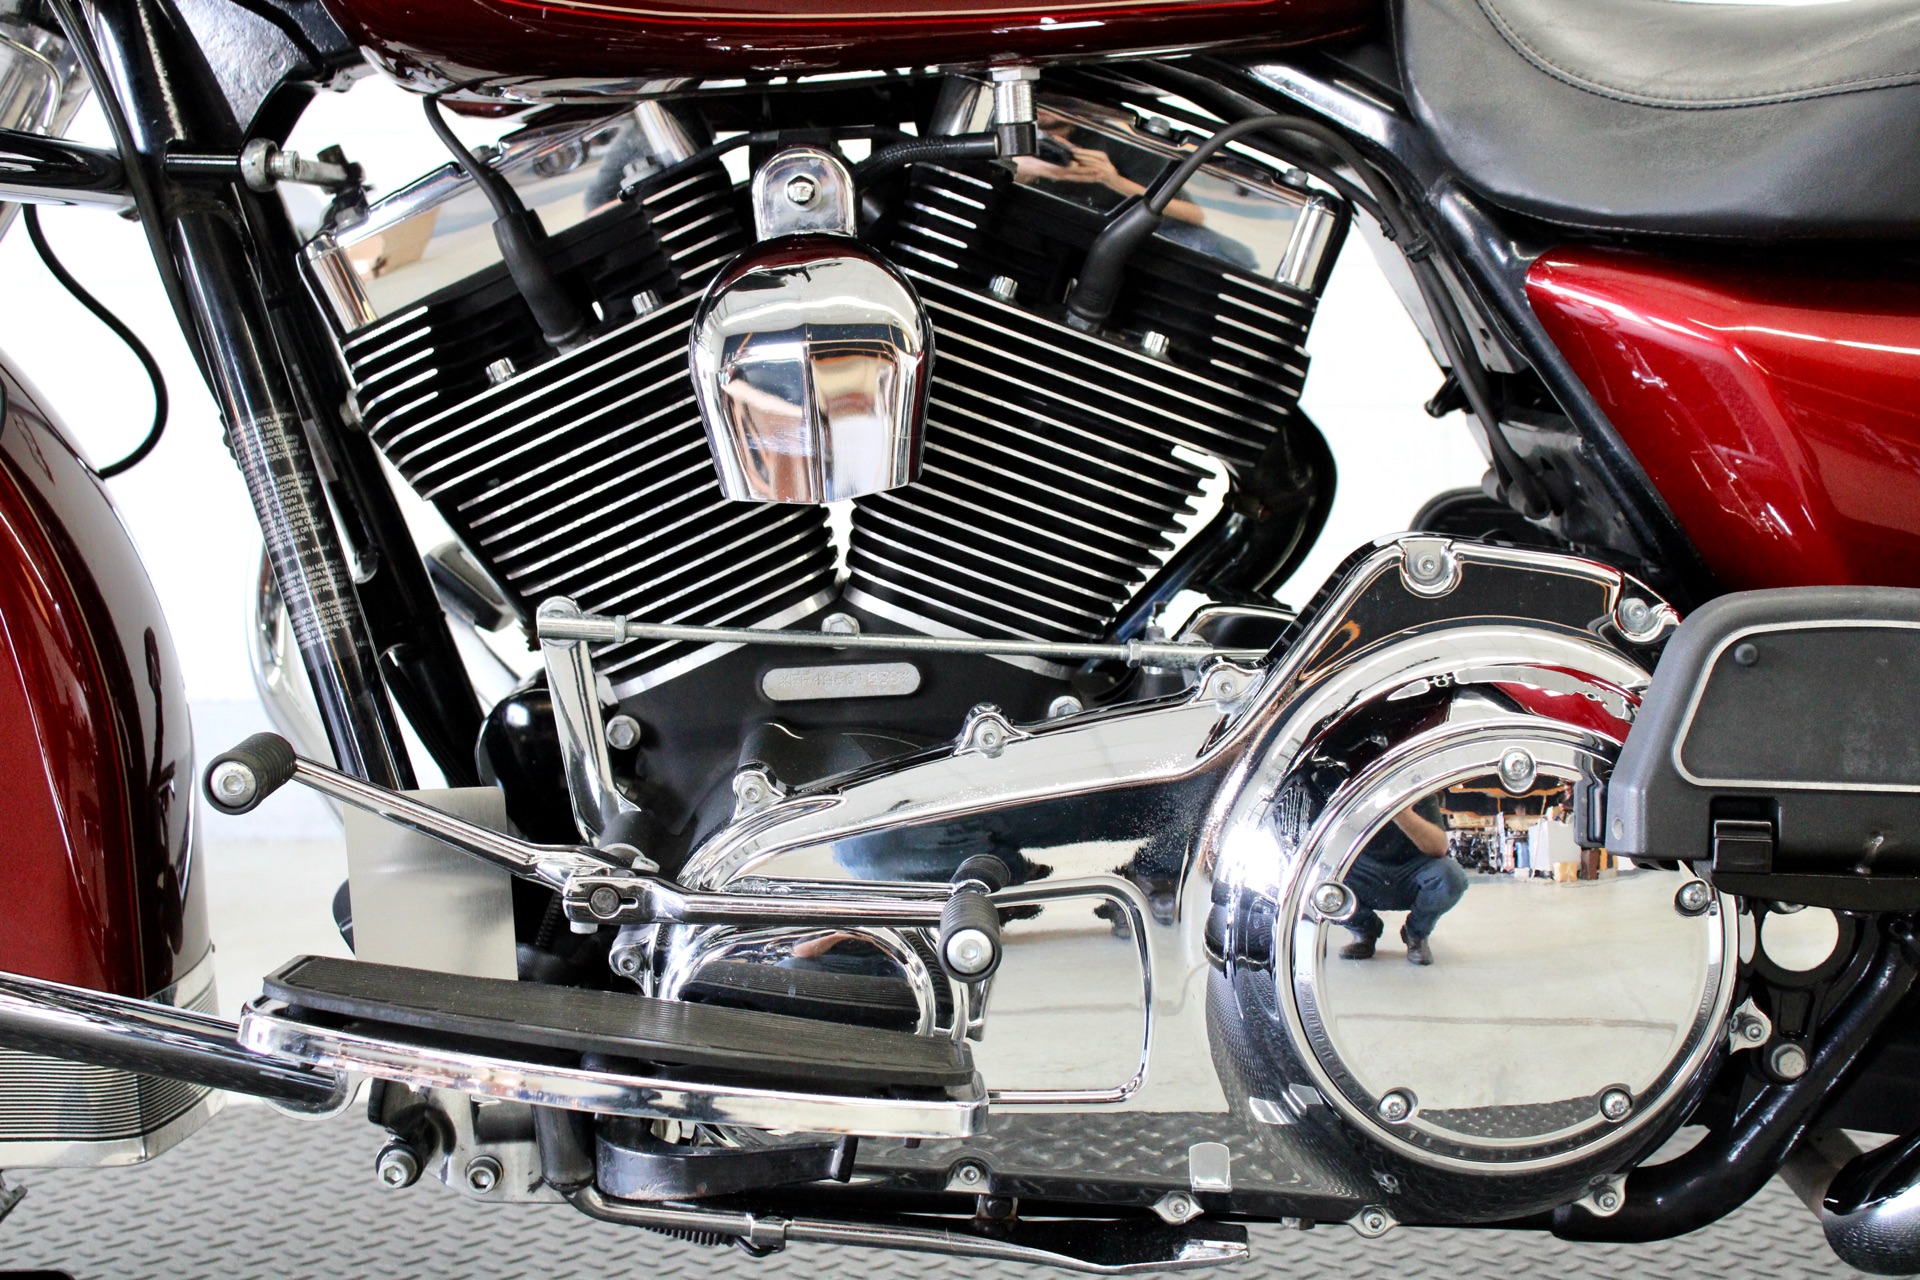 2010 Harley-Davidson Electra Glide® Classic in Fredericksburg, Virginia - Photo 19